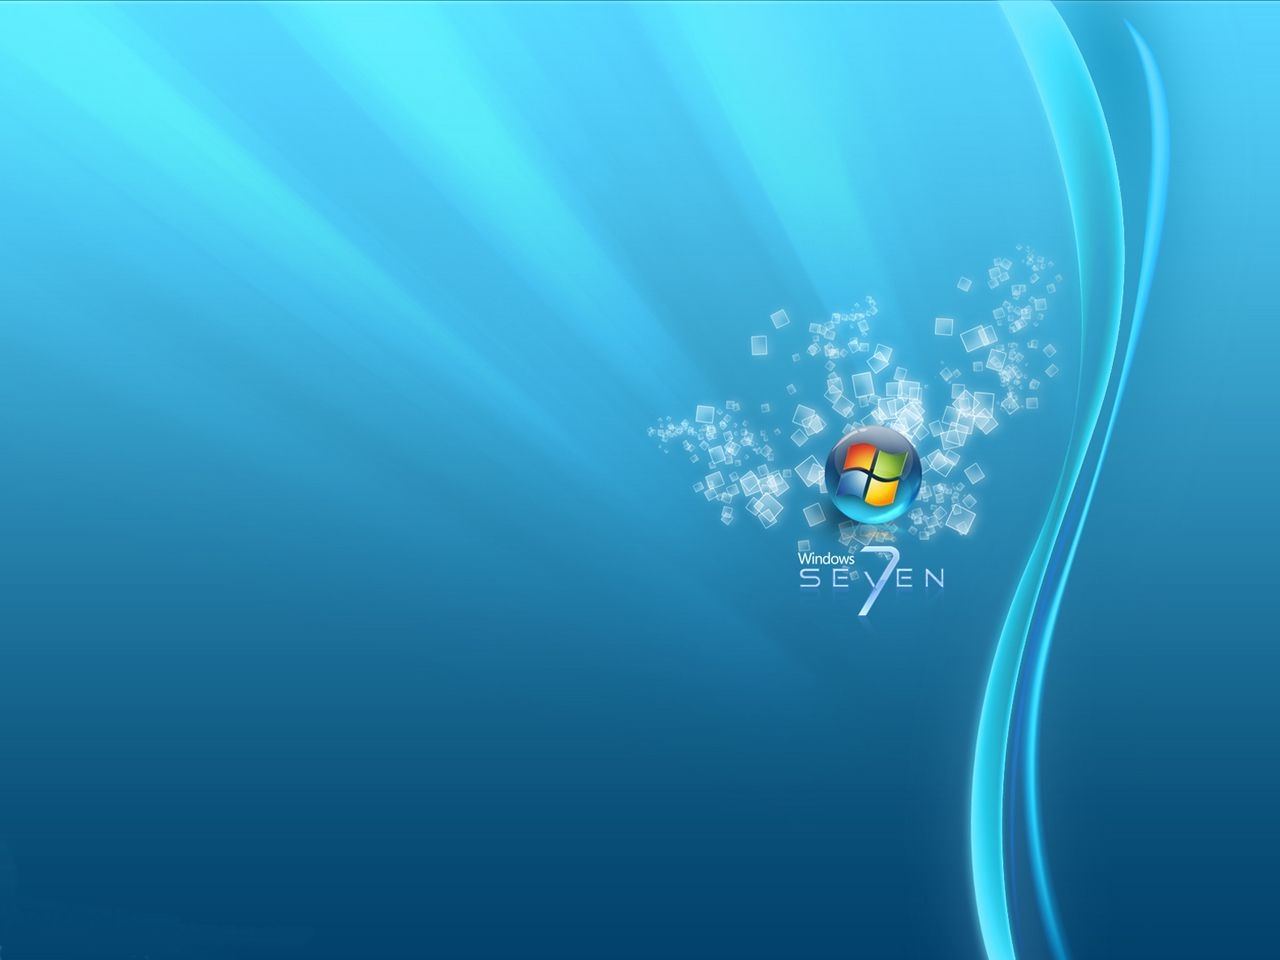 HD Wallpaper For Windows Desktop Background